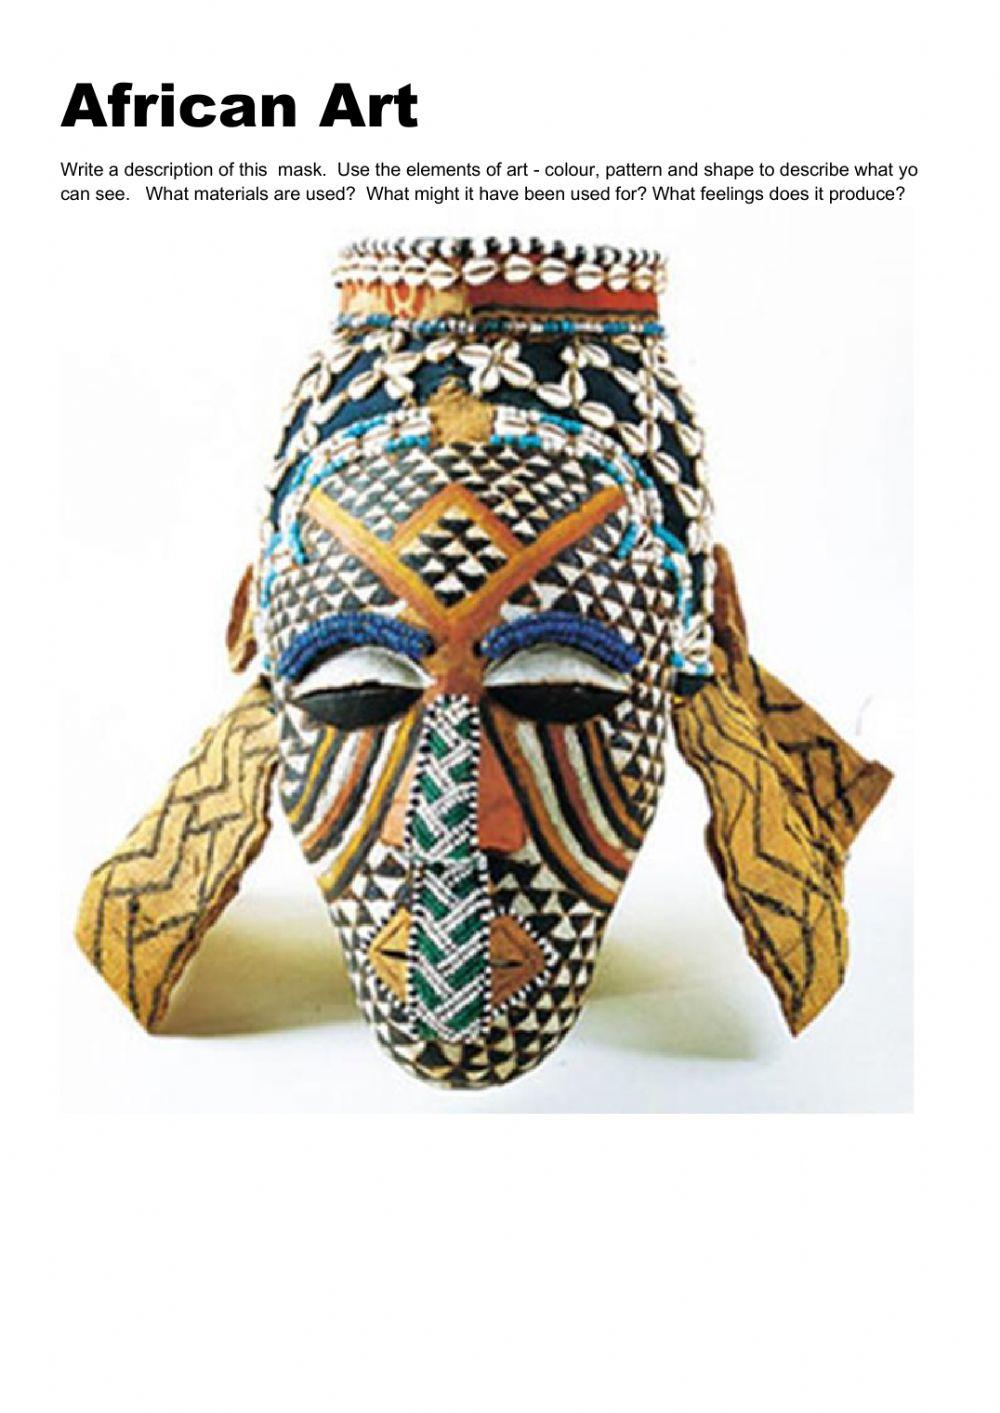 Analyse an African Art mask